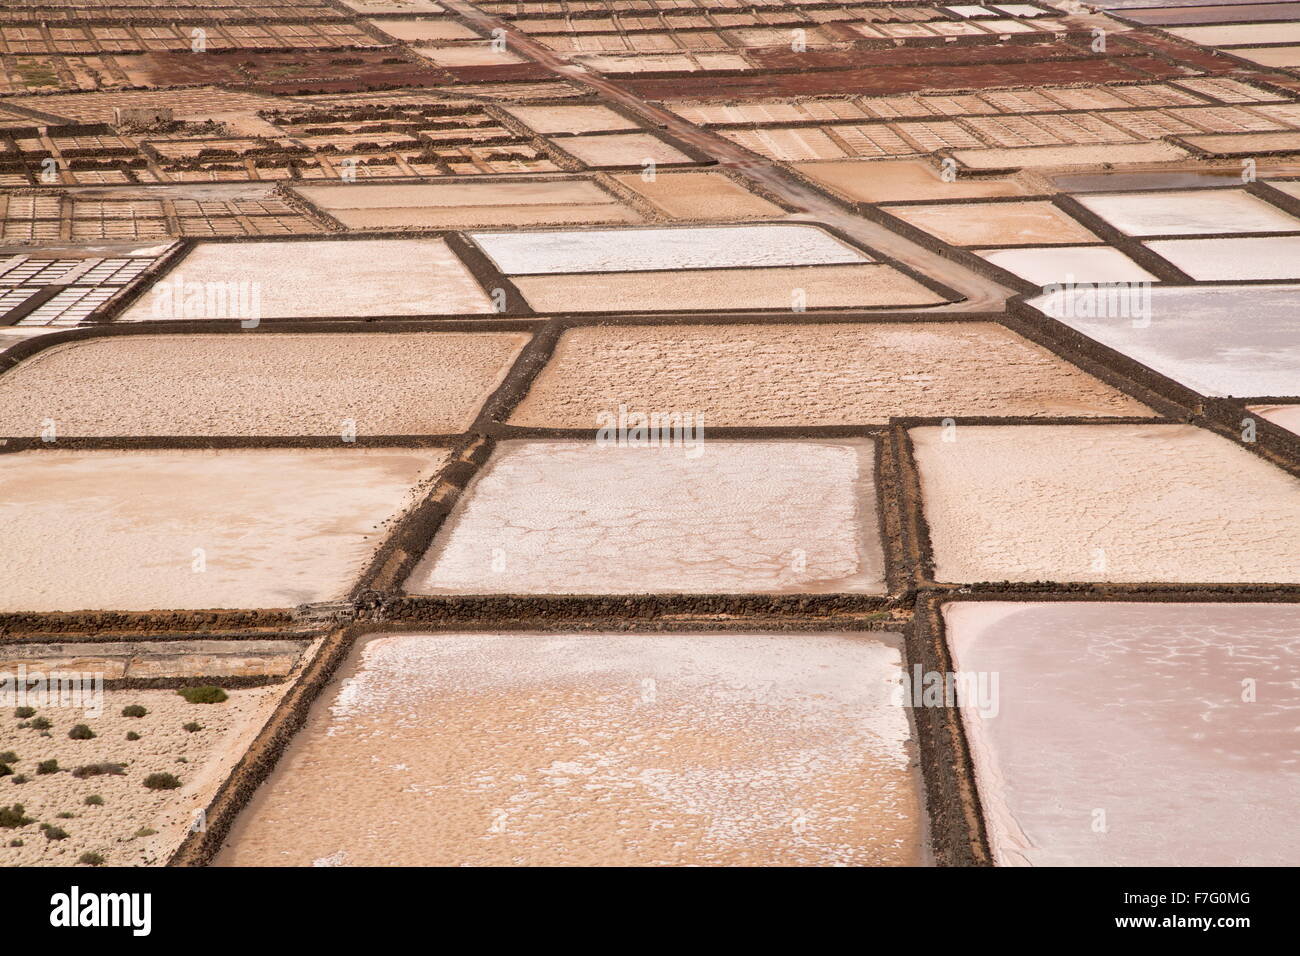 Active saltpans, or Salt evaporation ponds, at Salinas de Janubio, Lanzarote. Stock Photo